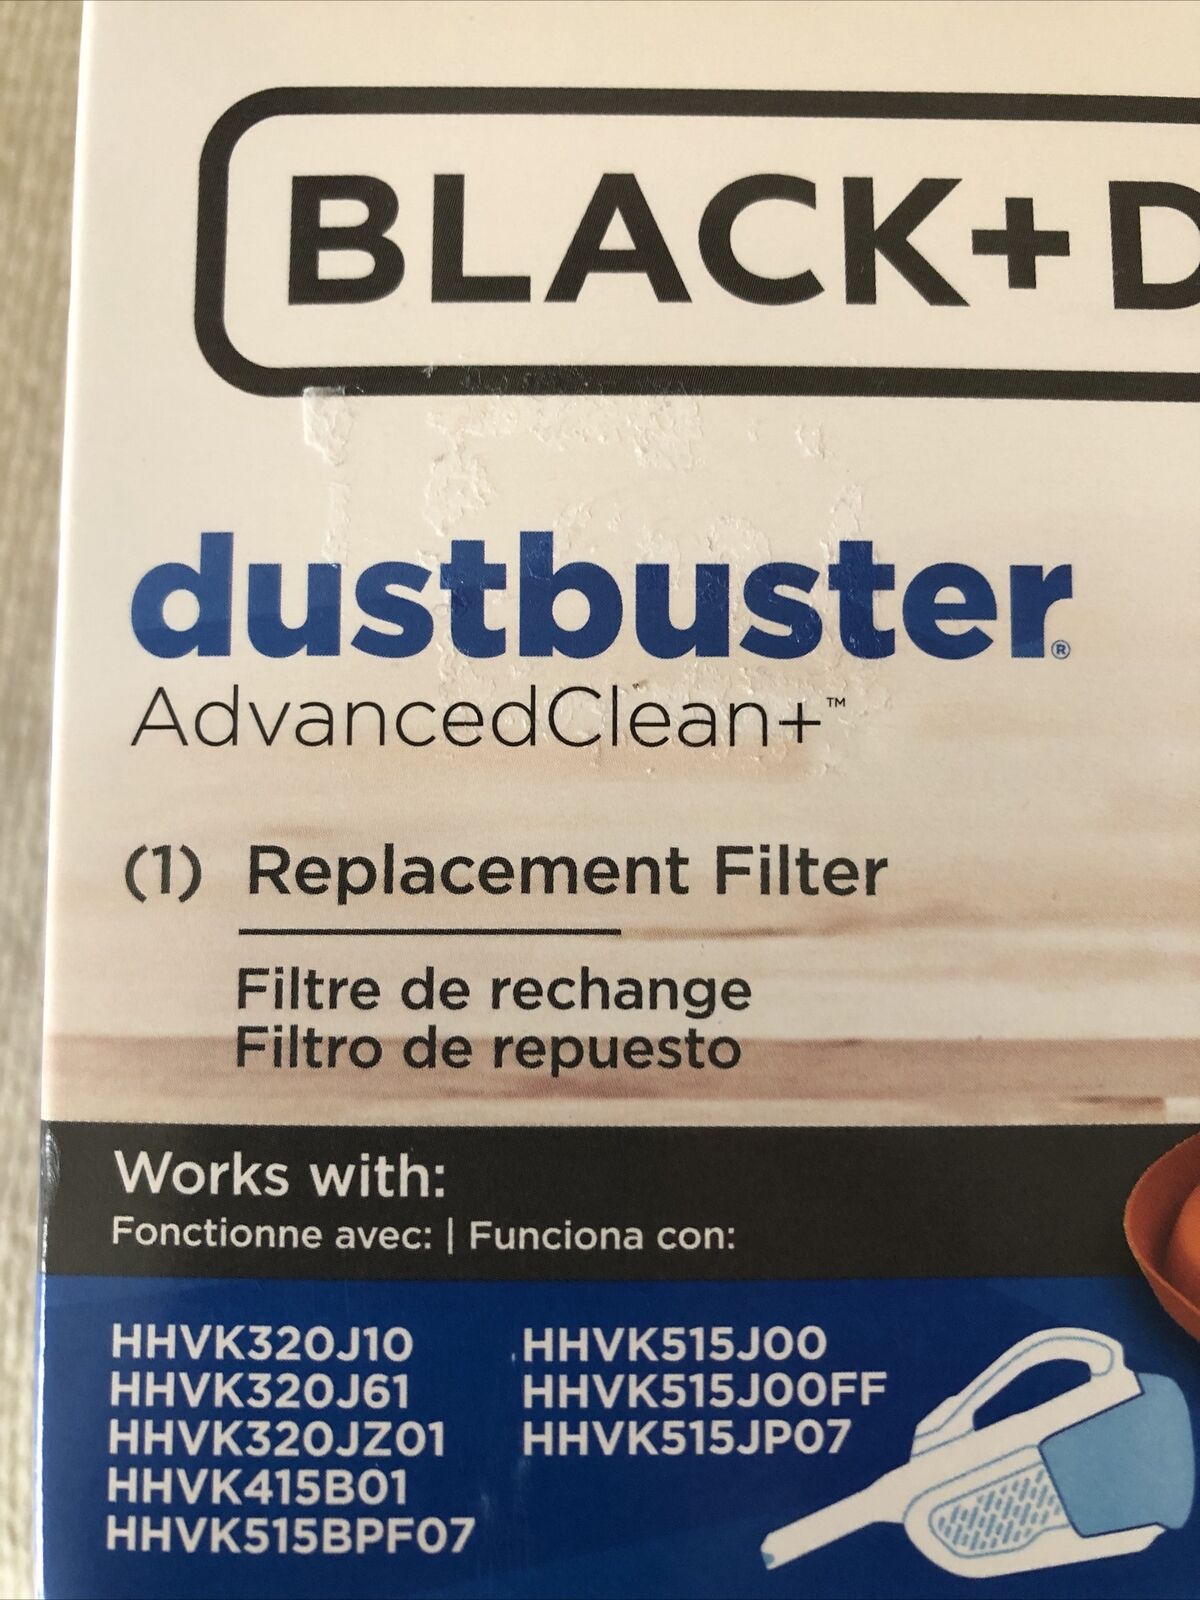 Black+Decker dustbuster AdvancedClean+ Replacement Filter #HHVKF10 (1/Pkg.)